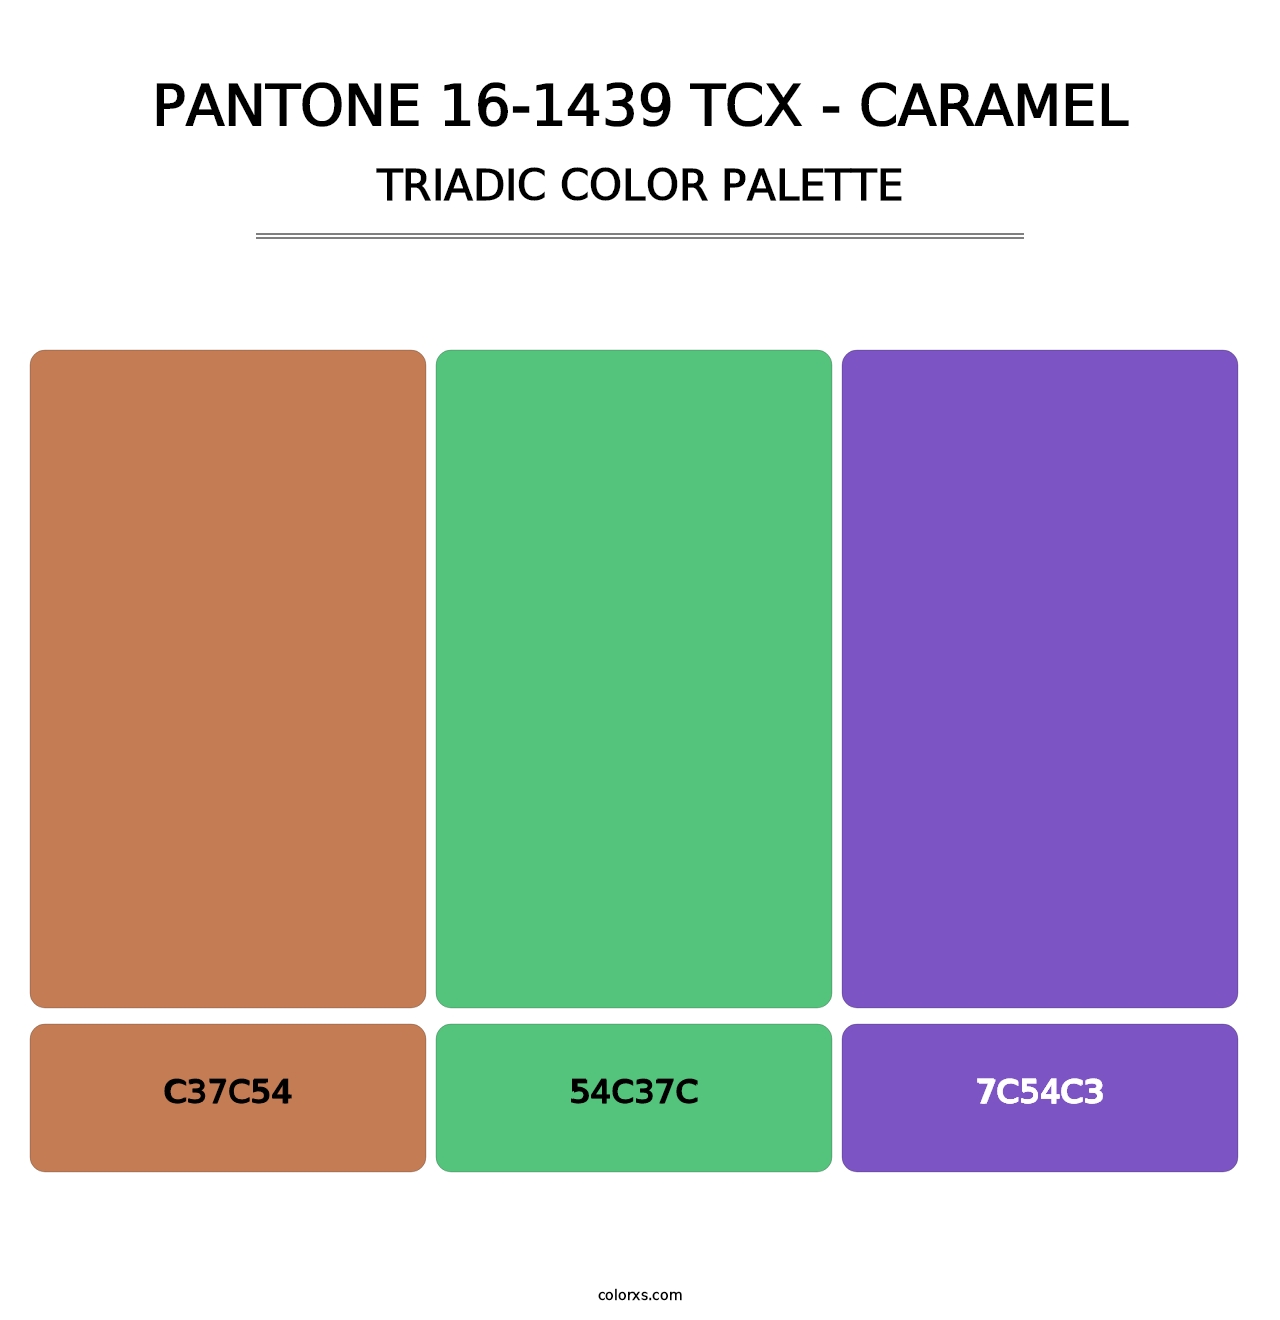 PANTONE 16-1439 TCX - Caramel - Triadic Color Palette